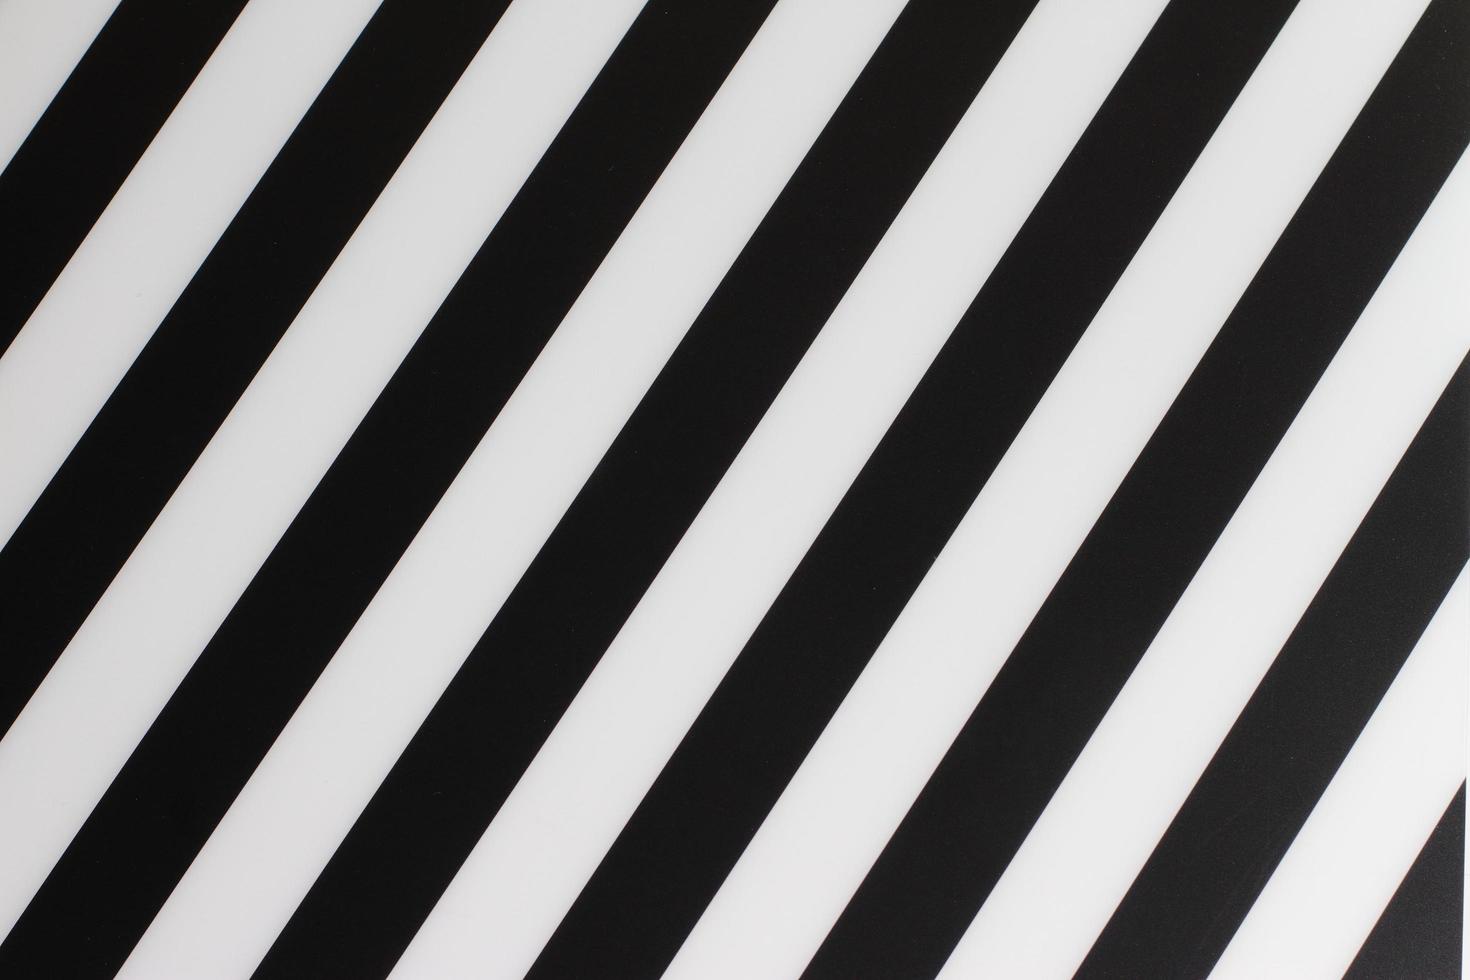 Zebra black and white stripes background, striped ornament backdrop photo